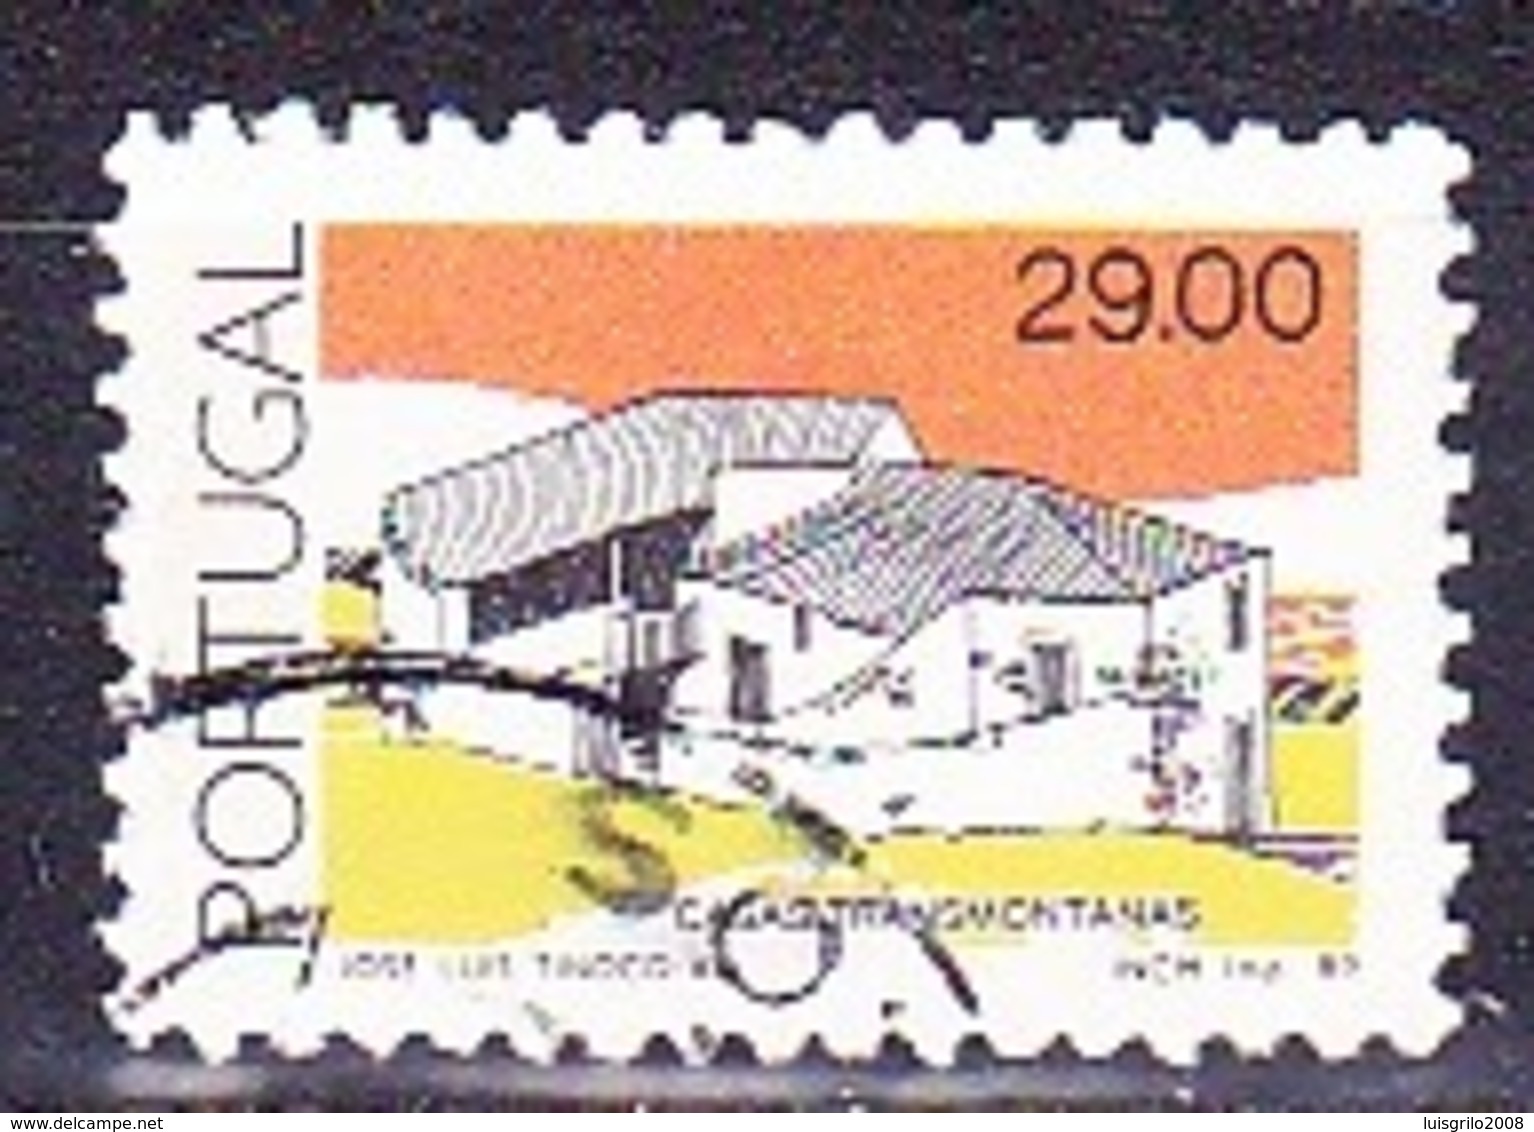 Portugal 1985 - Arquitectura Tradicional Portuguesa / 29.00 - Used Stamps